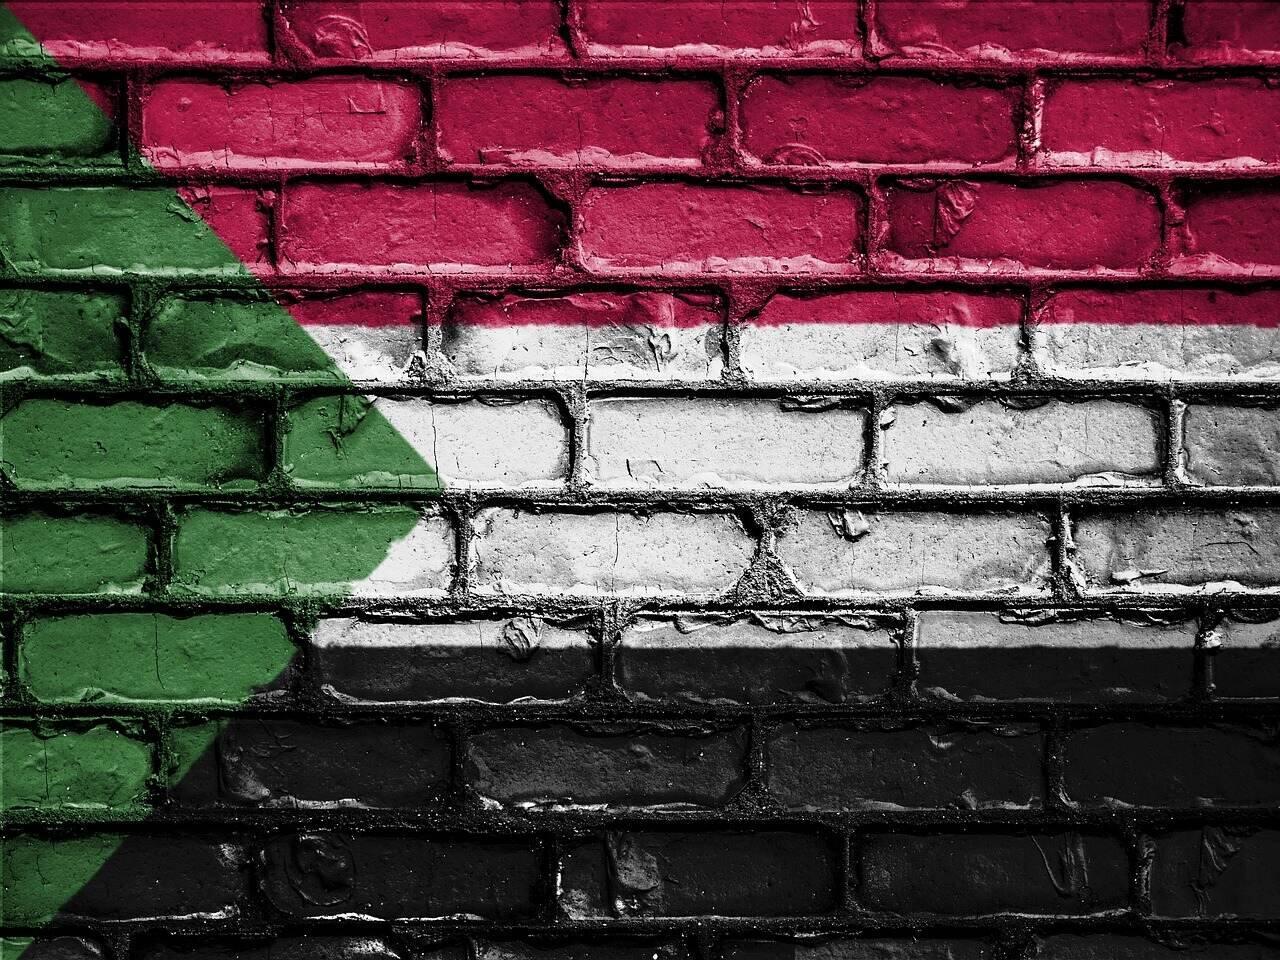 суданский флаг